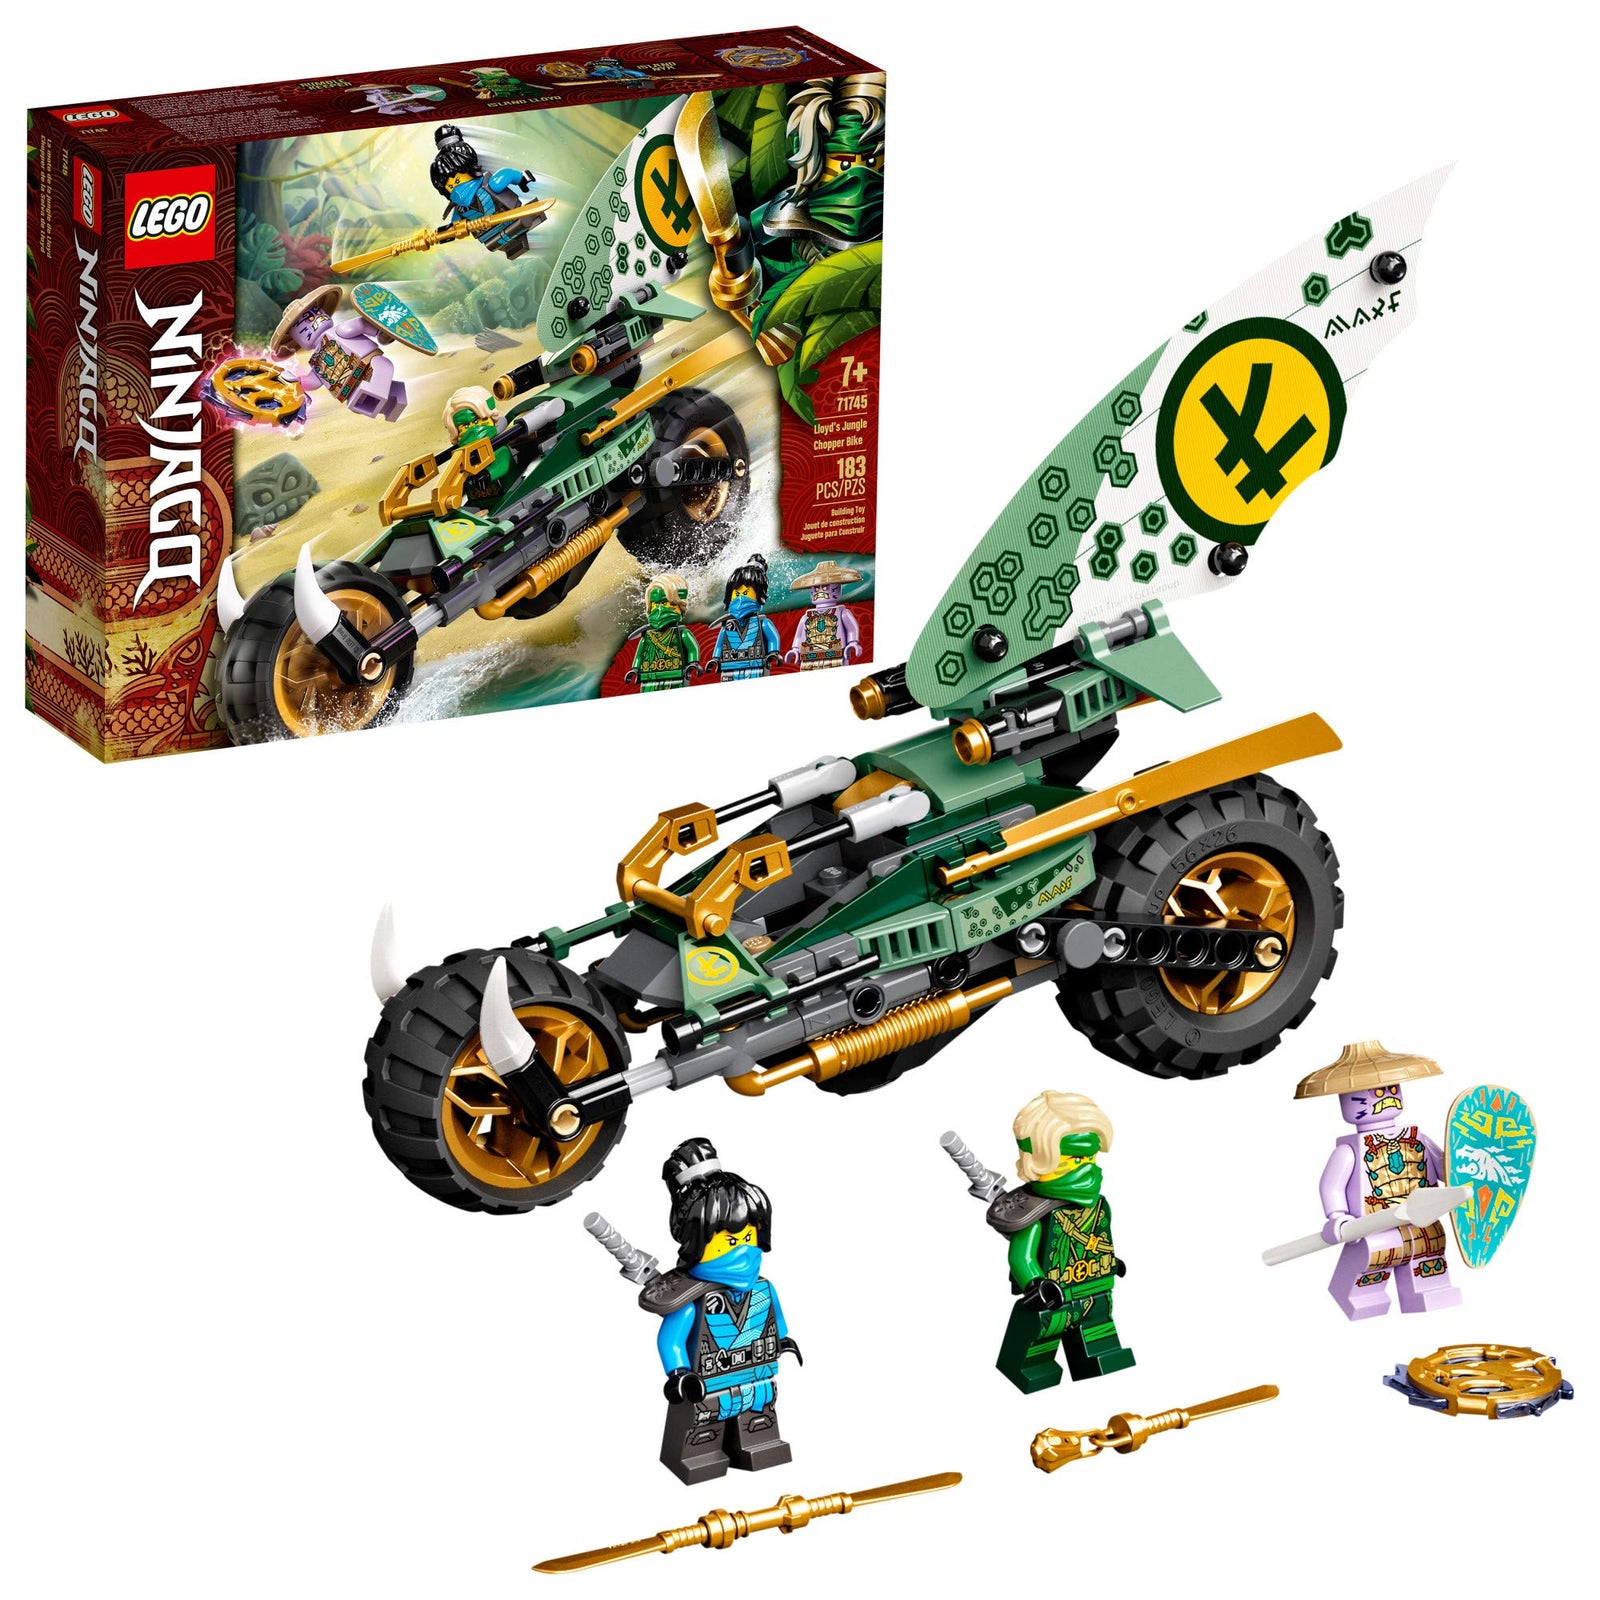 LEGO NINJAGO Lloyd’s Jungle Chopper Bike 71745 Building Kit; Ninja Bike Toy Featuring NINJAGO Lloyd and NYA Minifigures, New 2021 (183 Pieces); Top Toy for Kids Who Love Action-Packed Creative Play